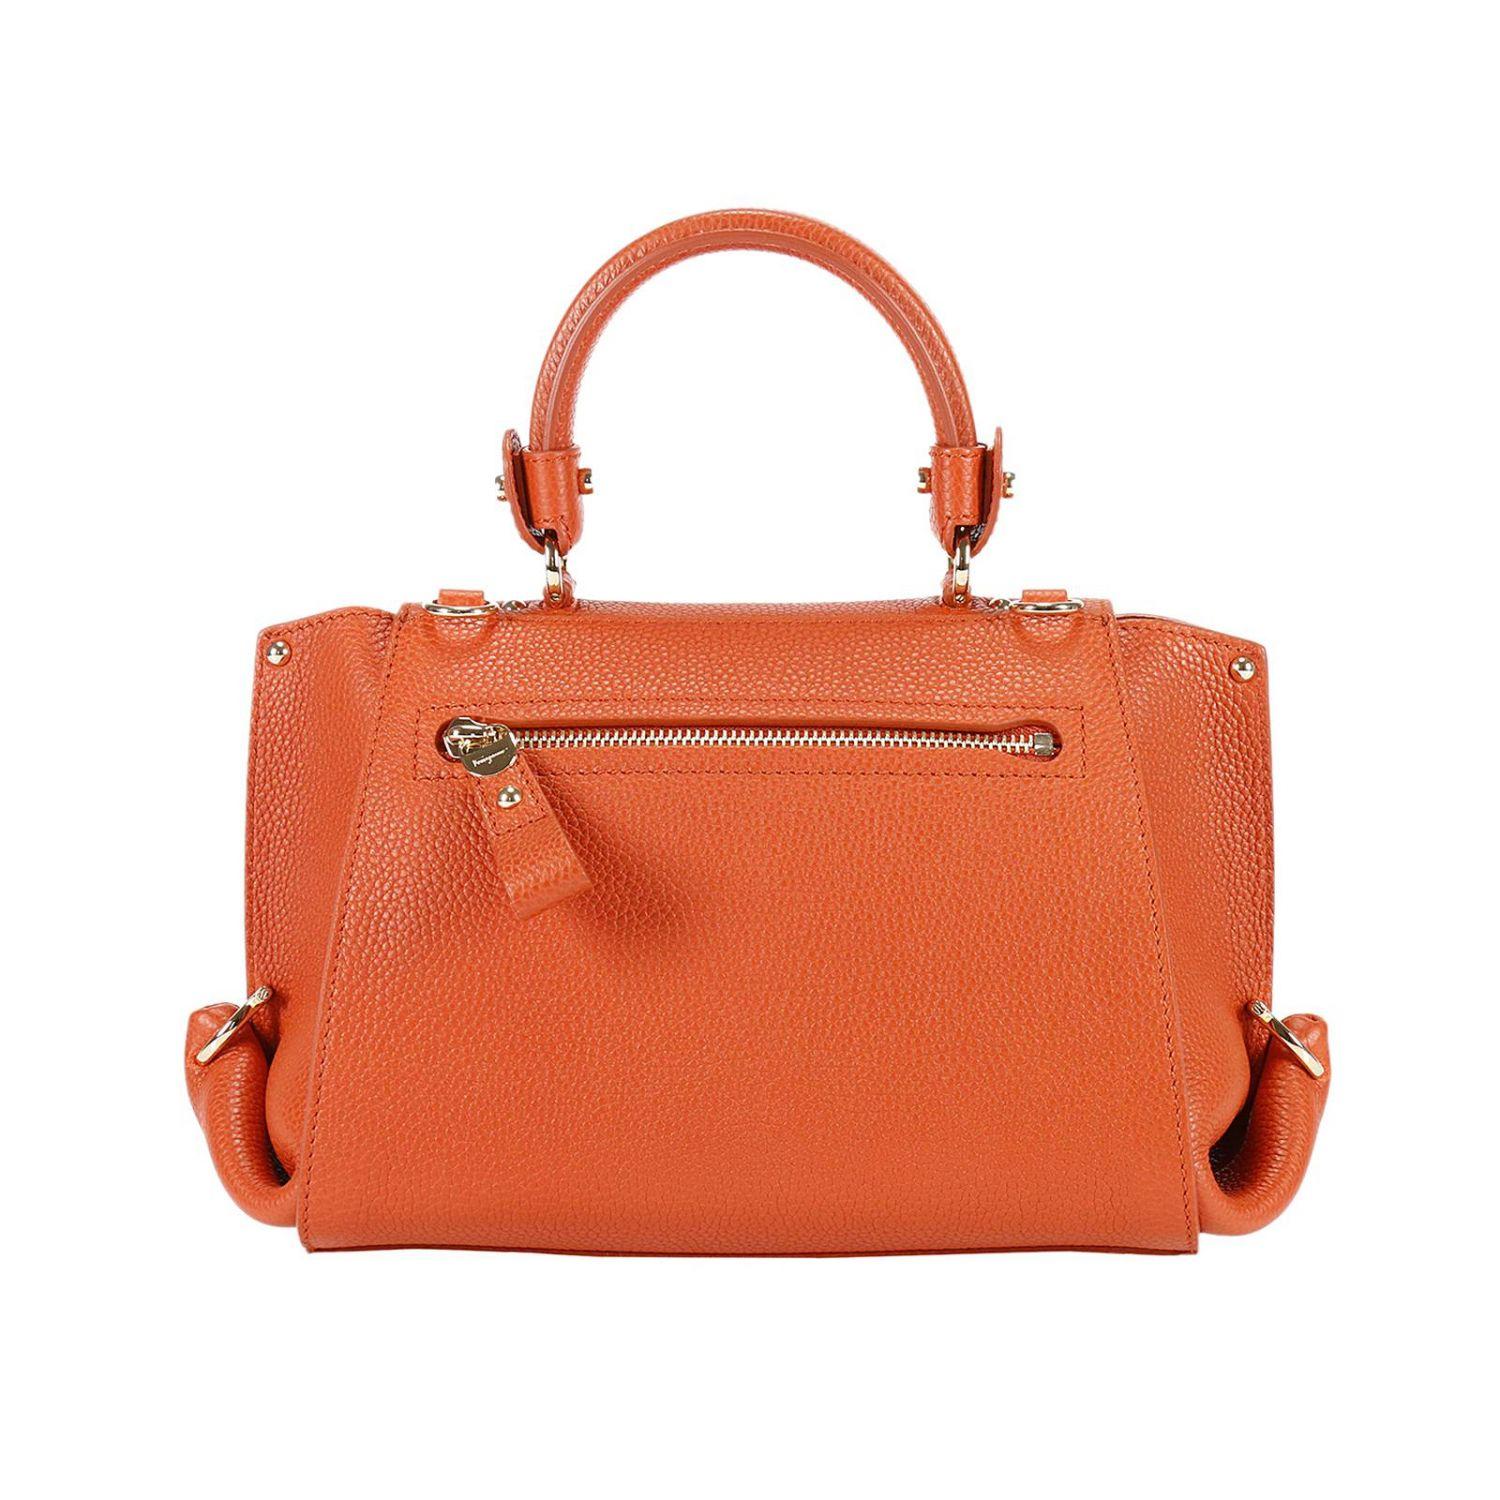 Ferragamo Leather Mini Bag Handbag Women in Orange - Lyst